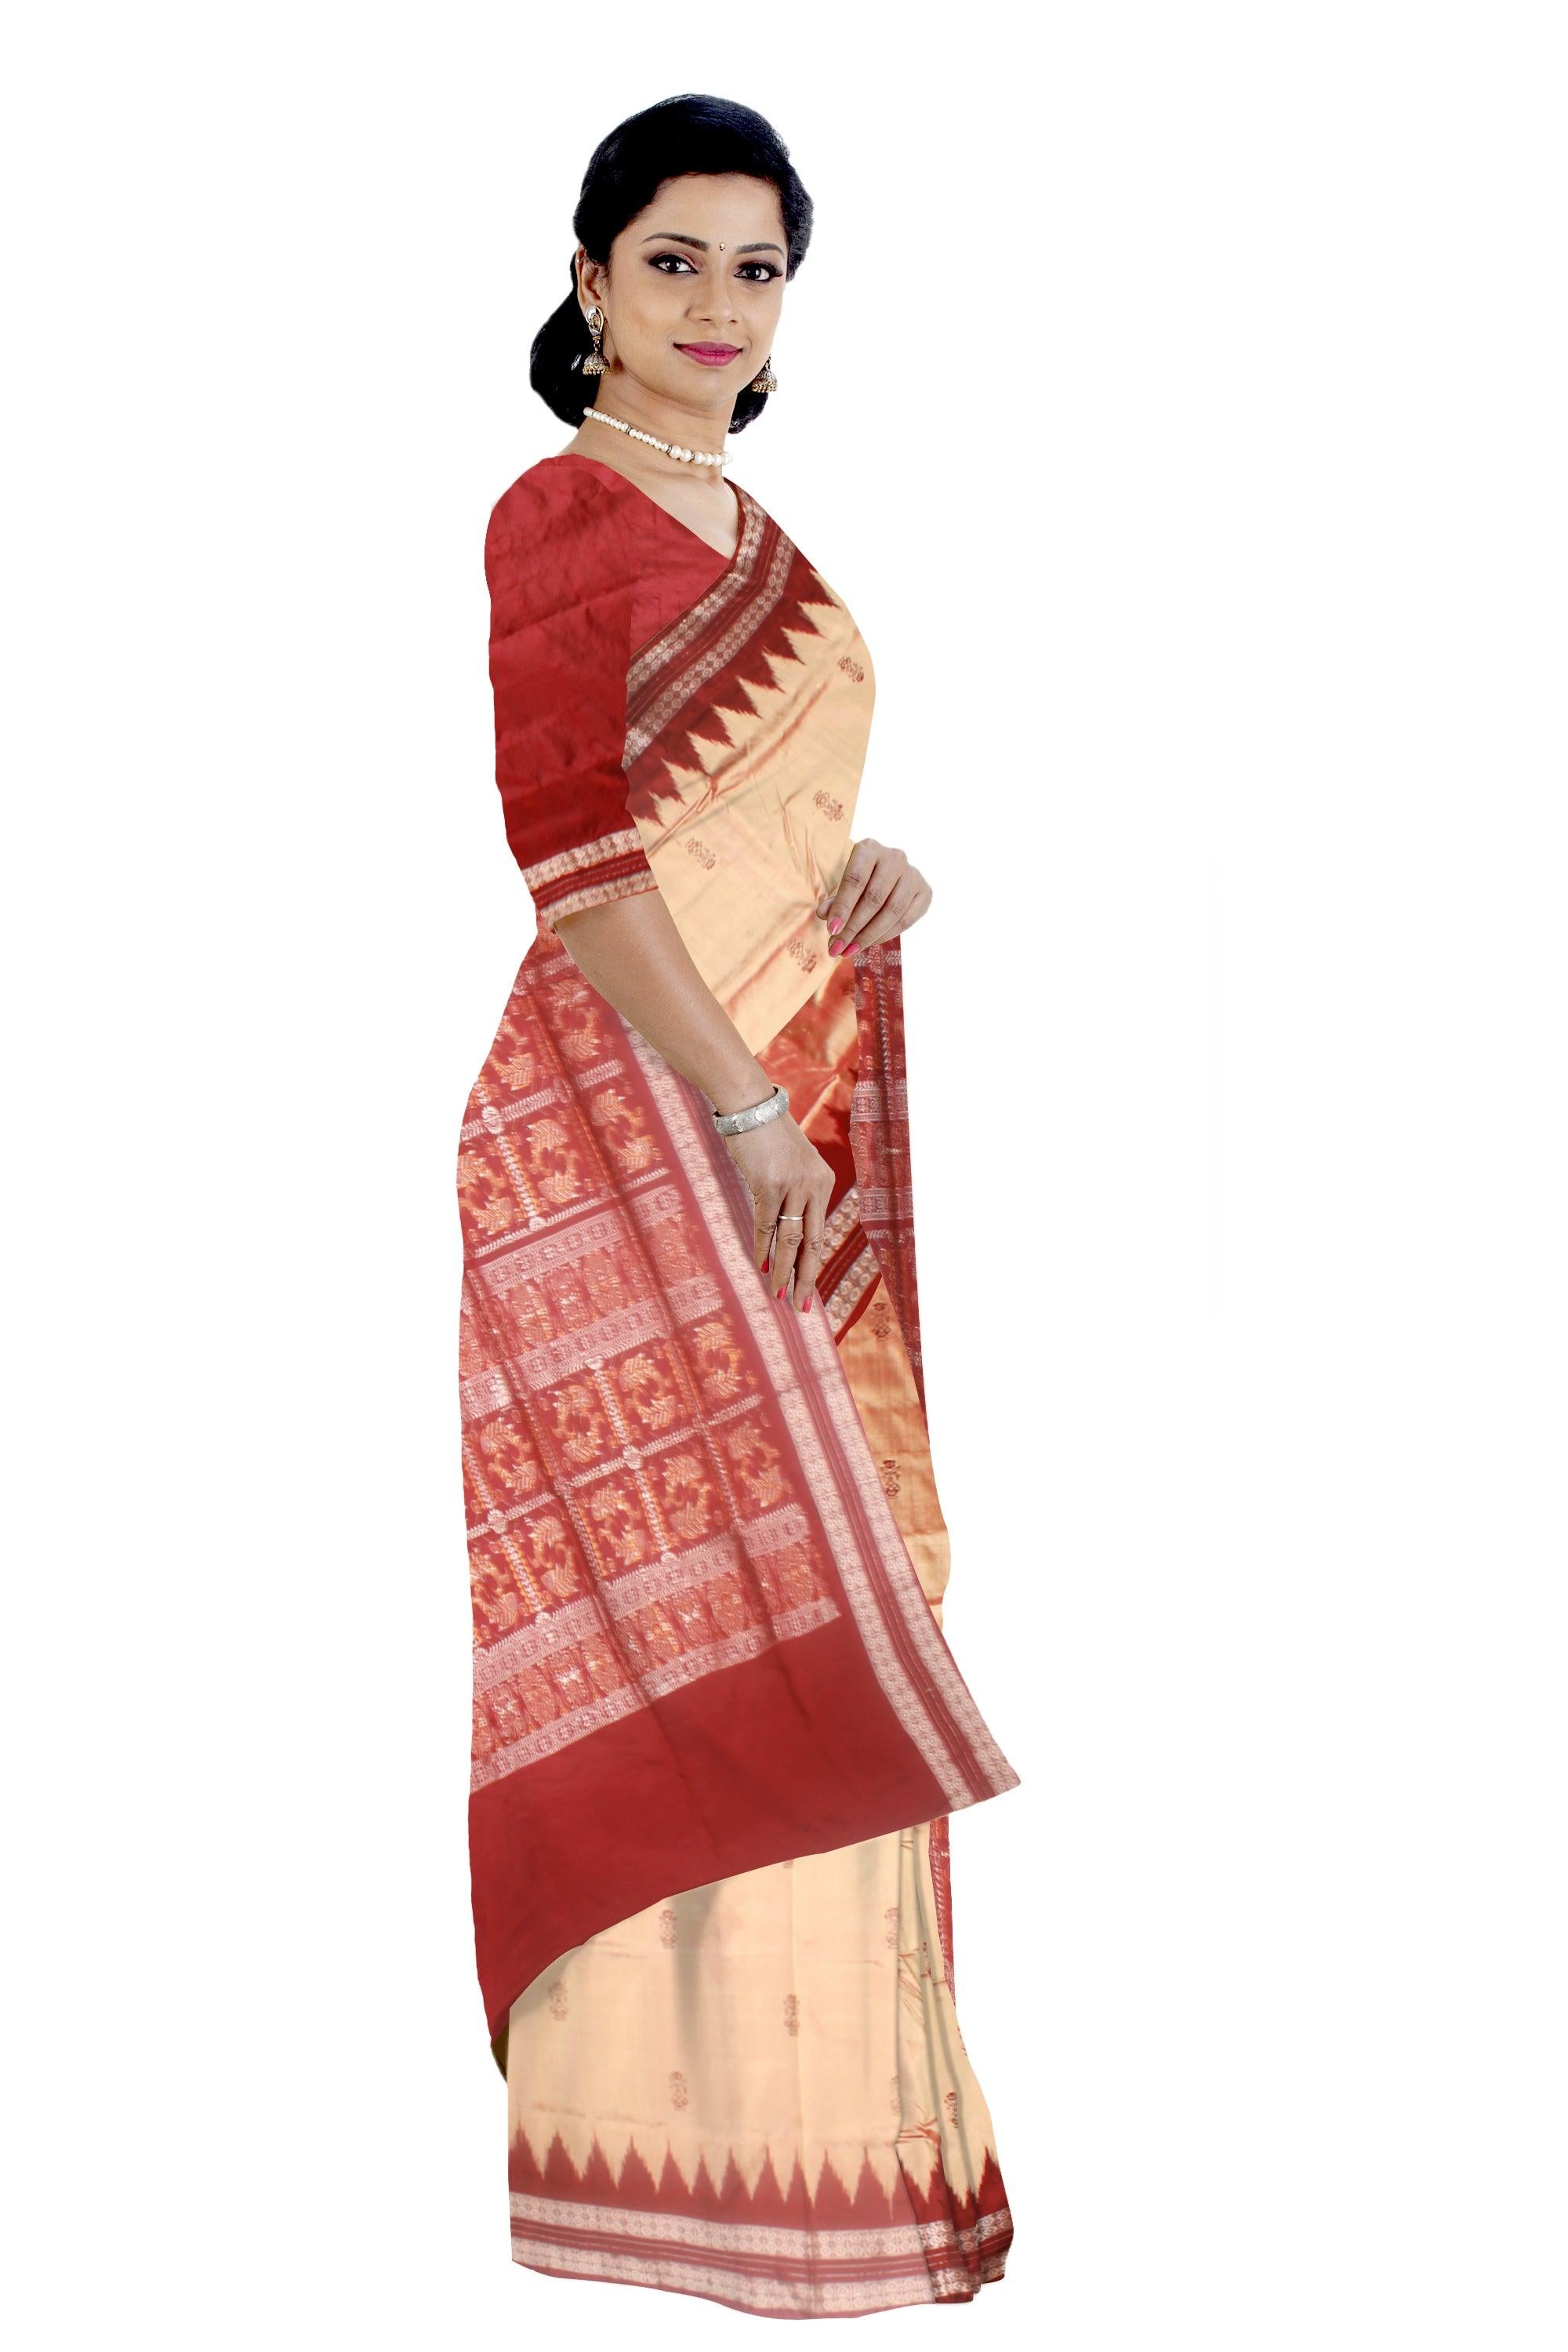 A Sambalpuri  bomkei Pata saree in Ghee colour with blouse piece. - Koshali Arts & Crafts Enterprise